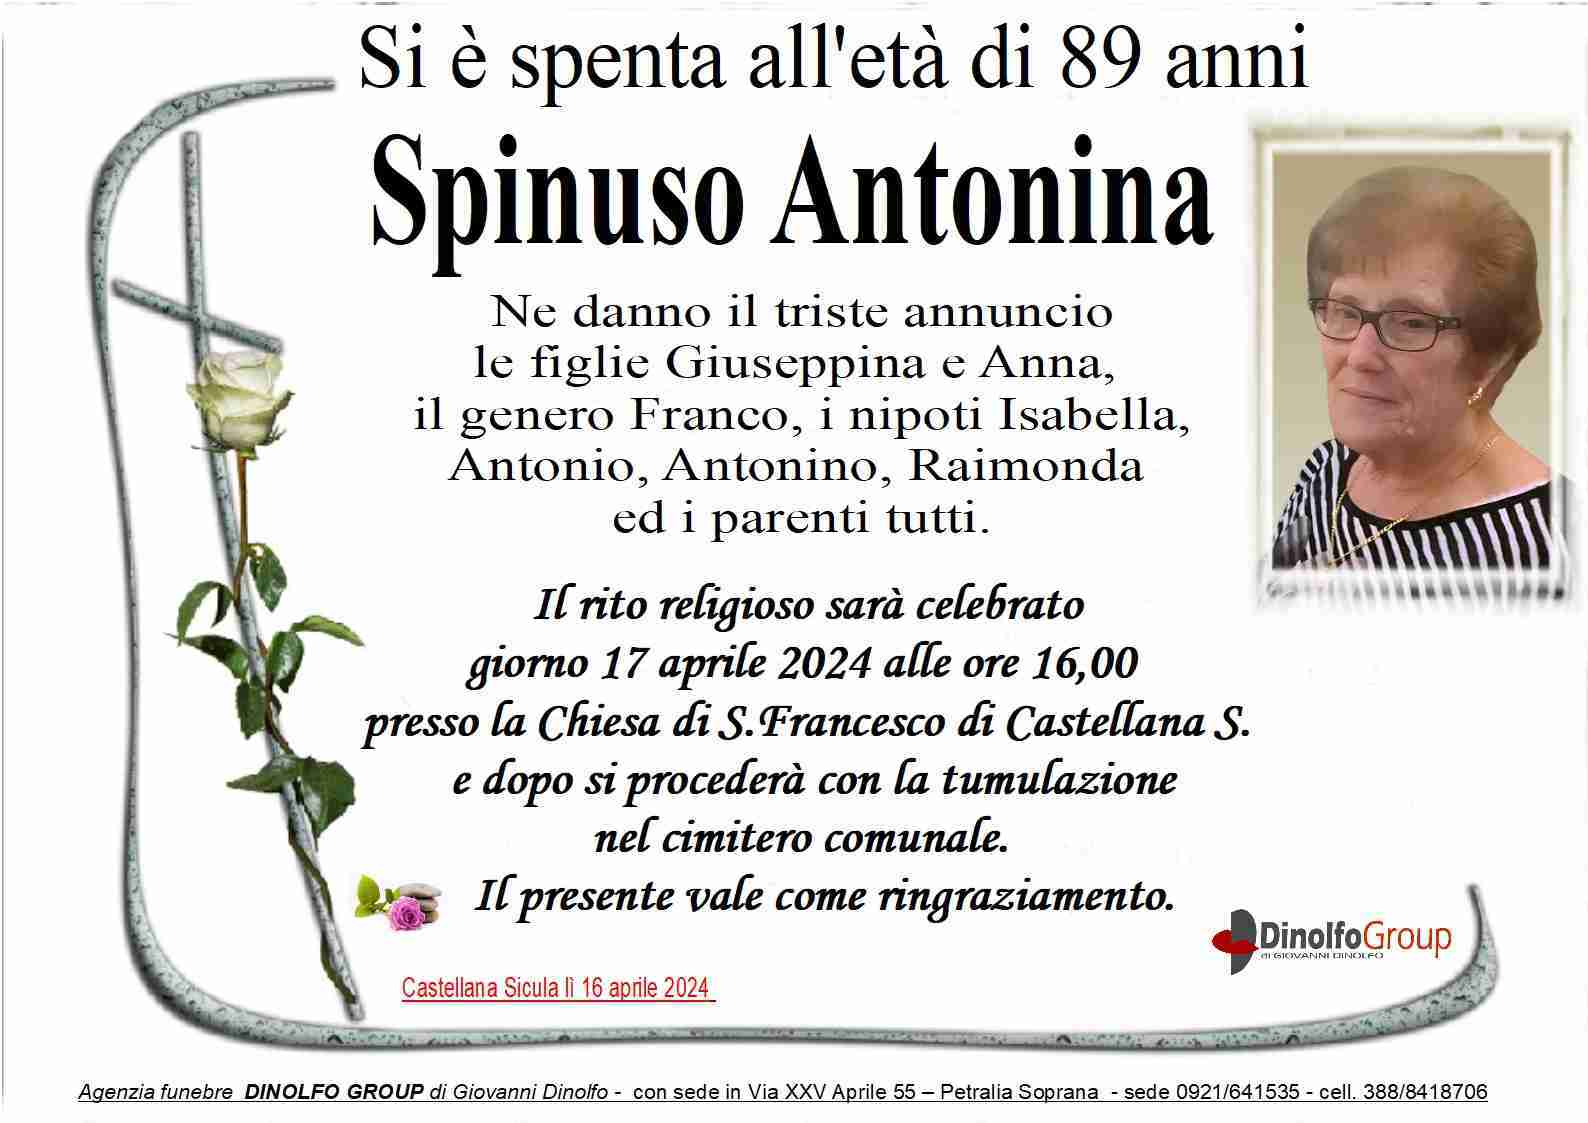 Antonina Spinuso